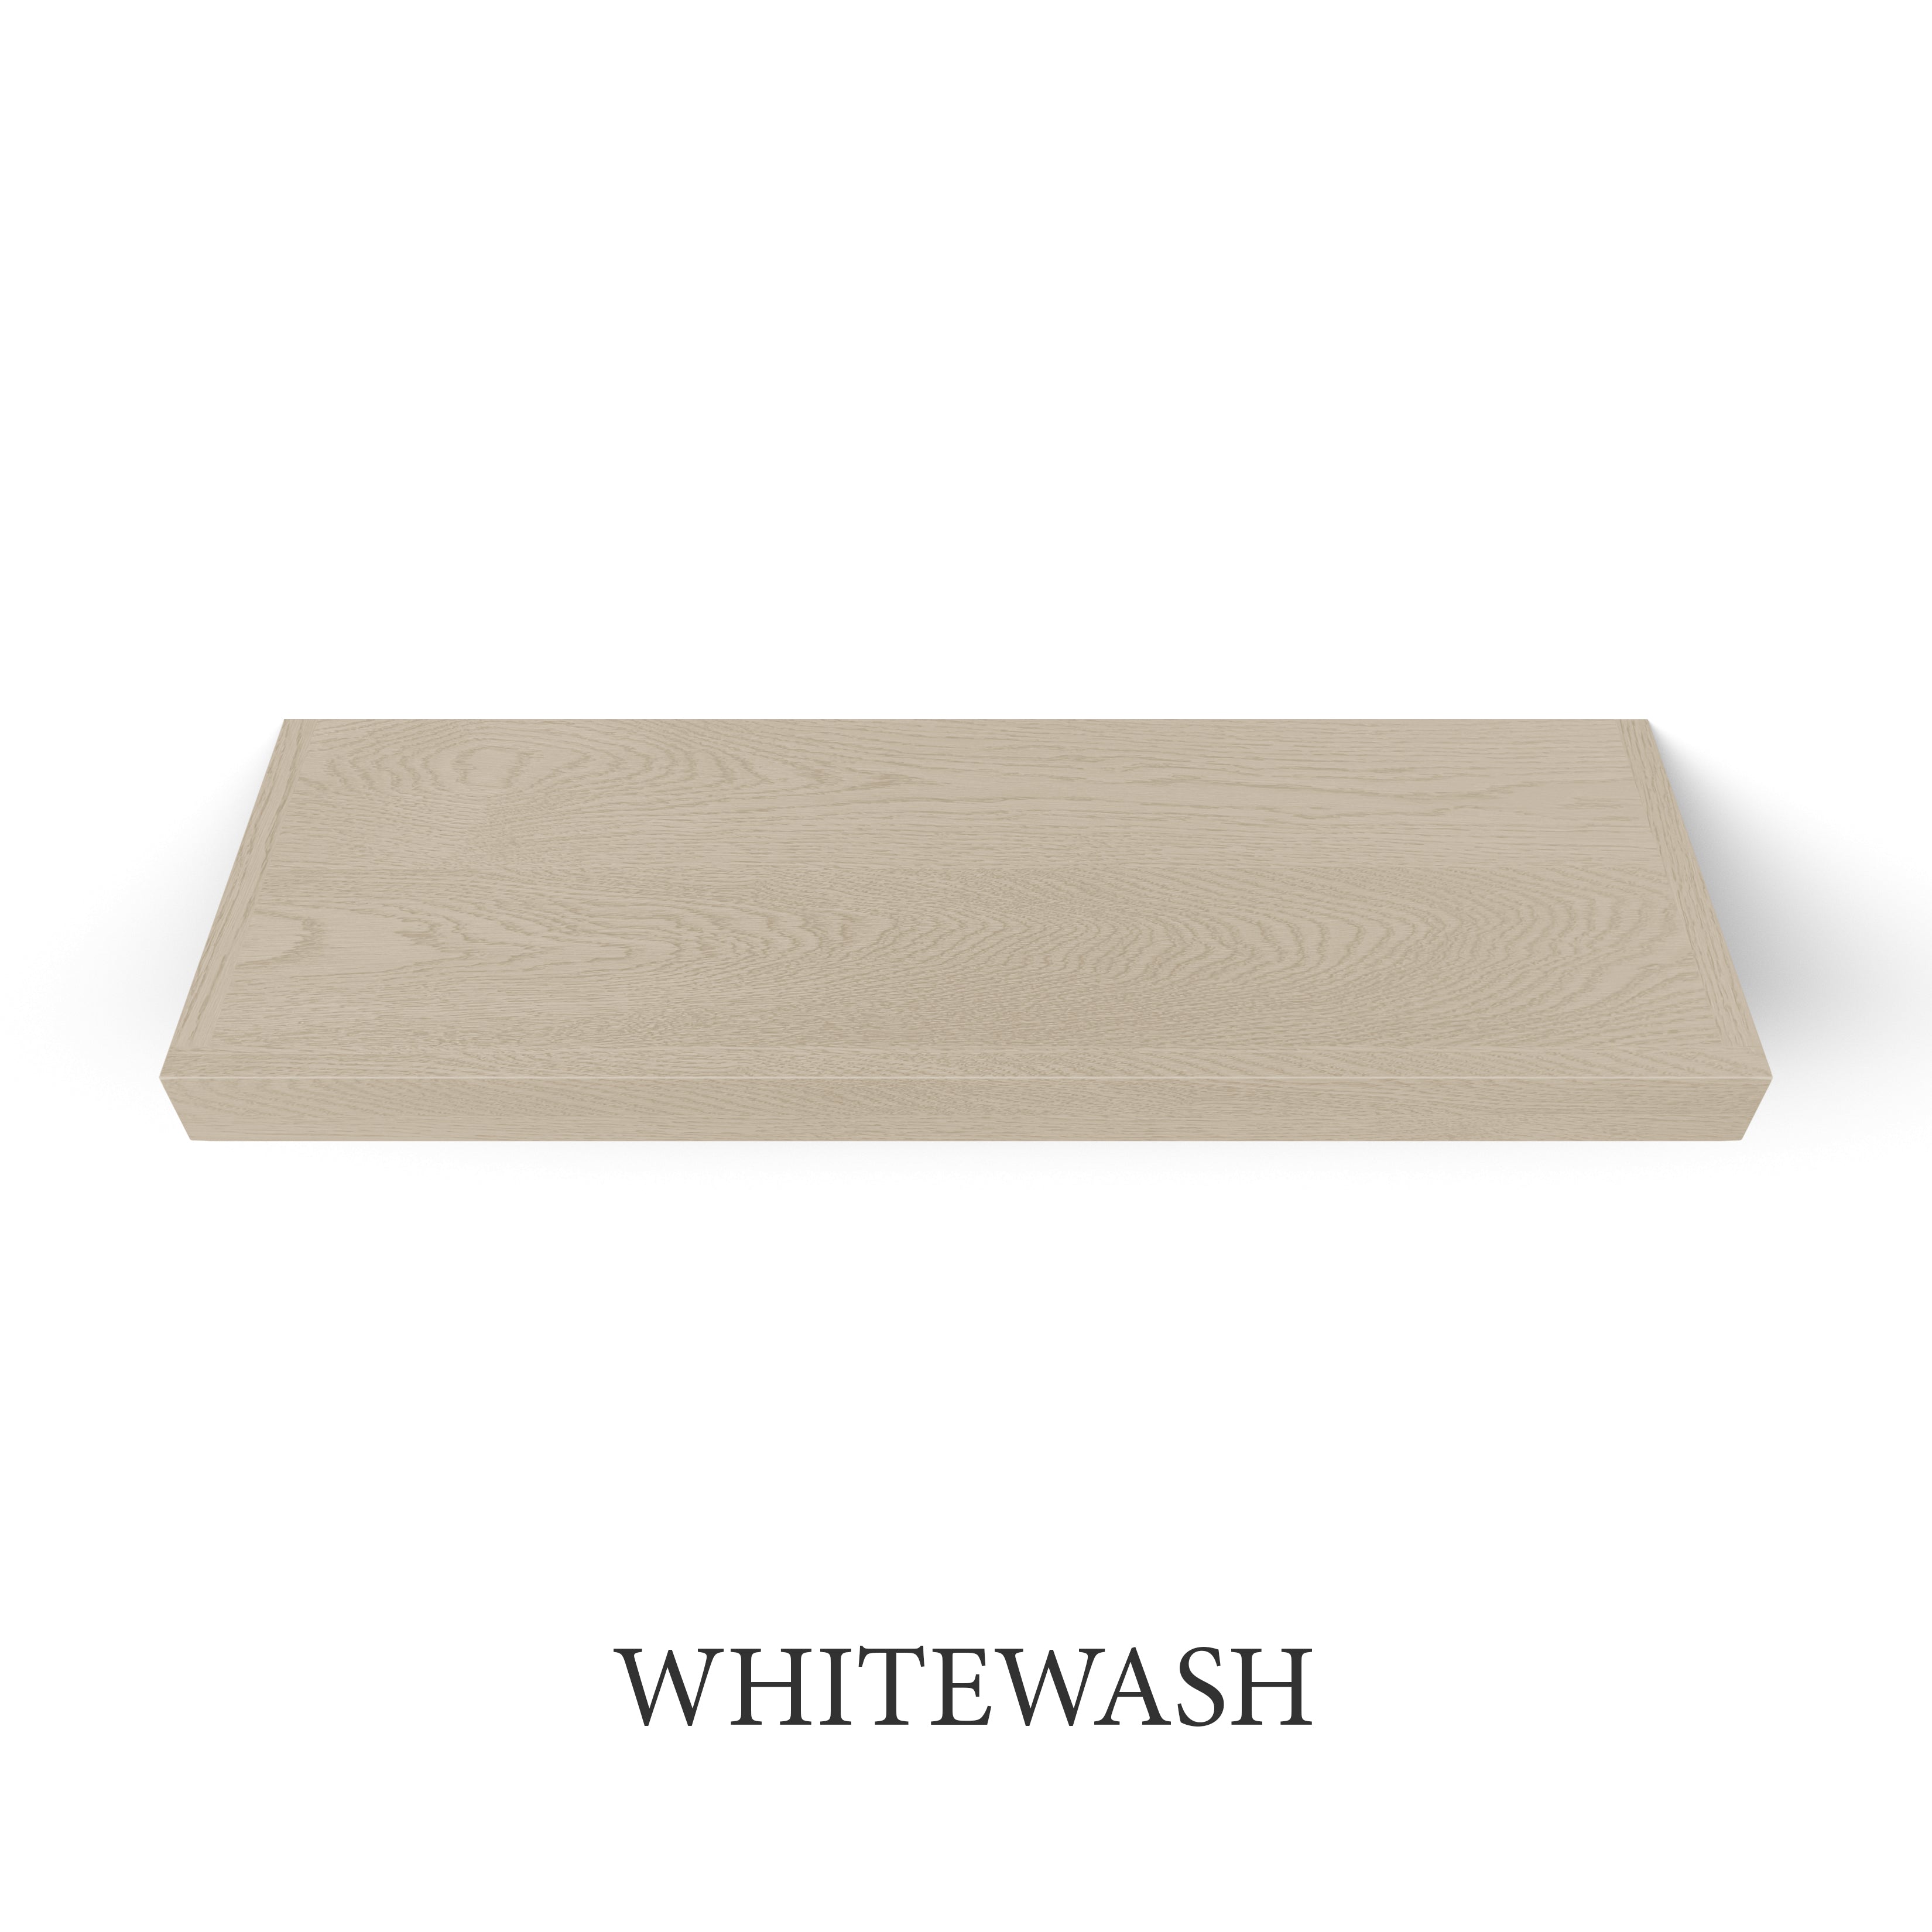 whitewash White Oak 2 Inch Thick Floating Shelf